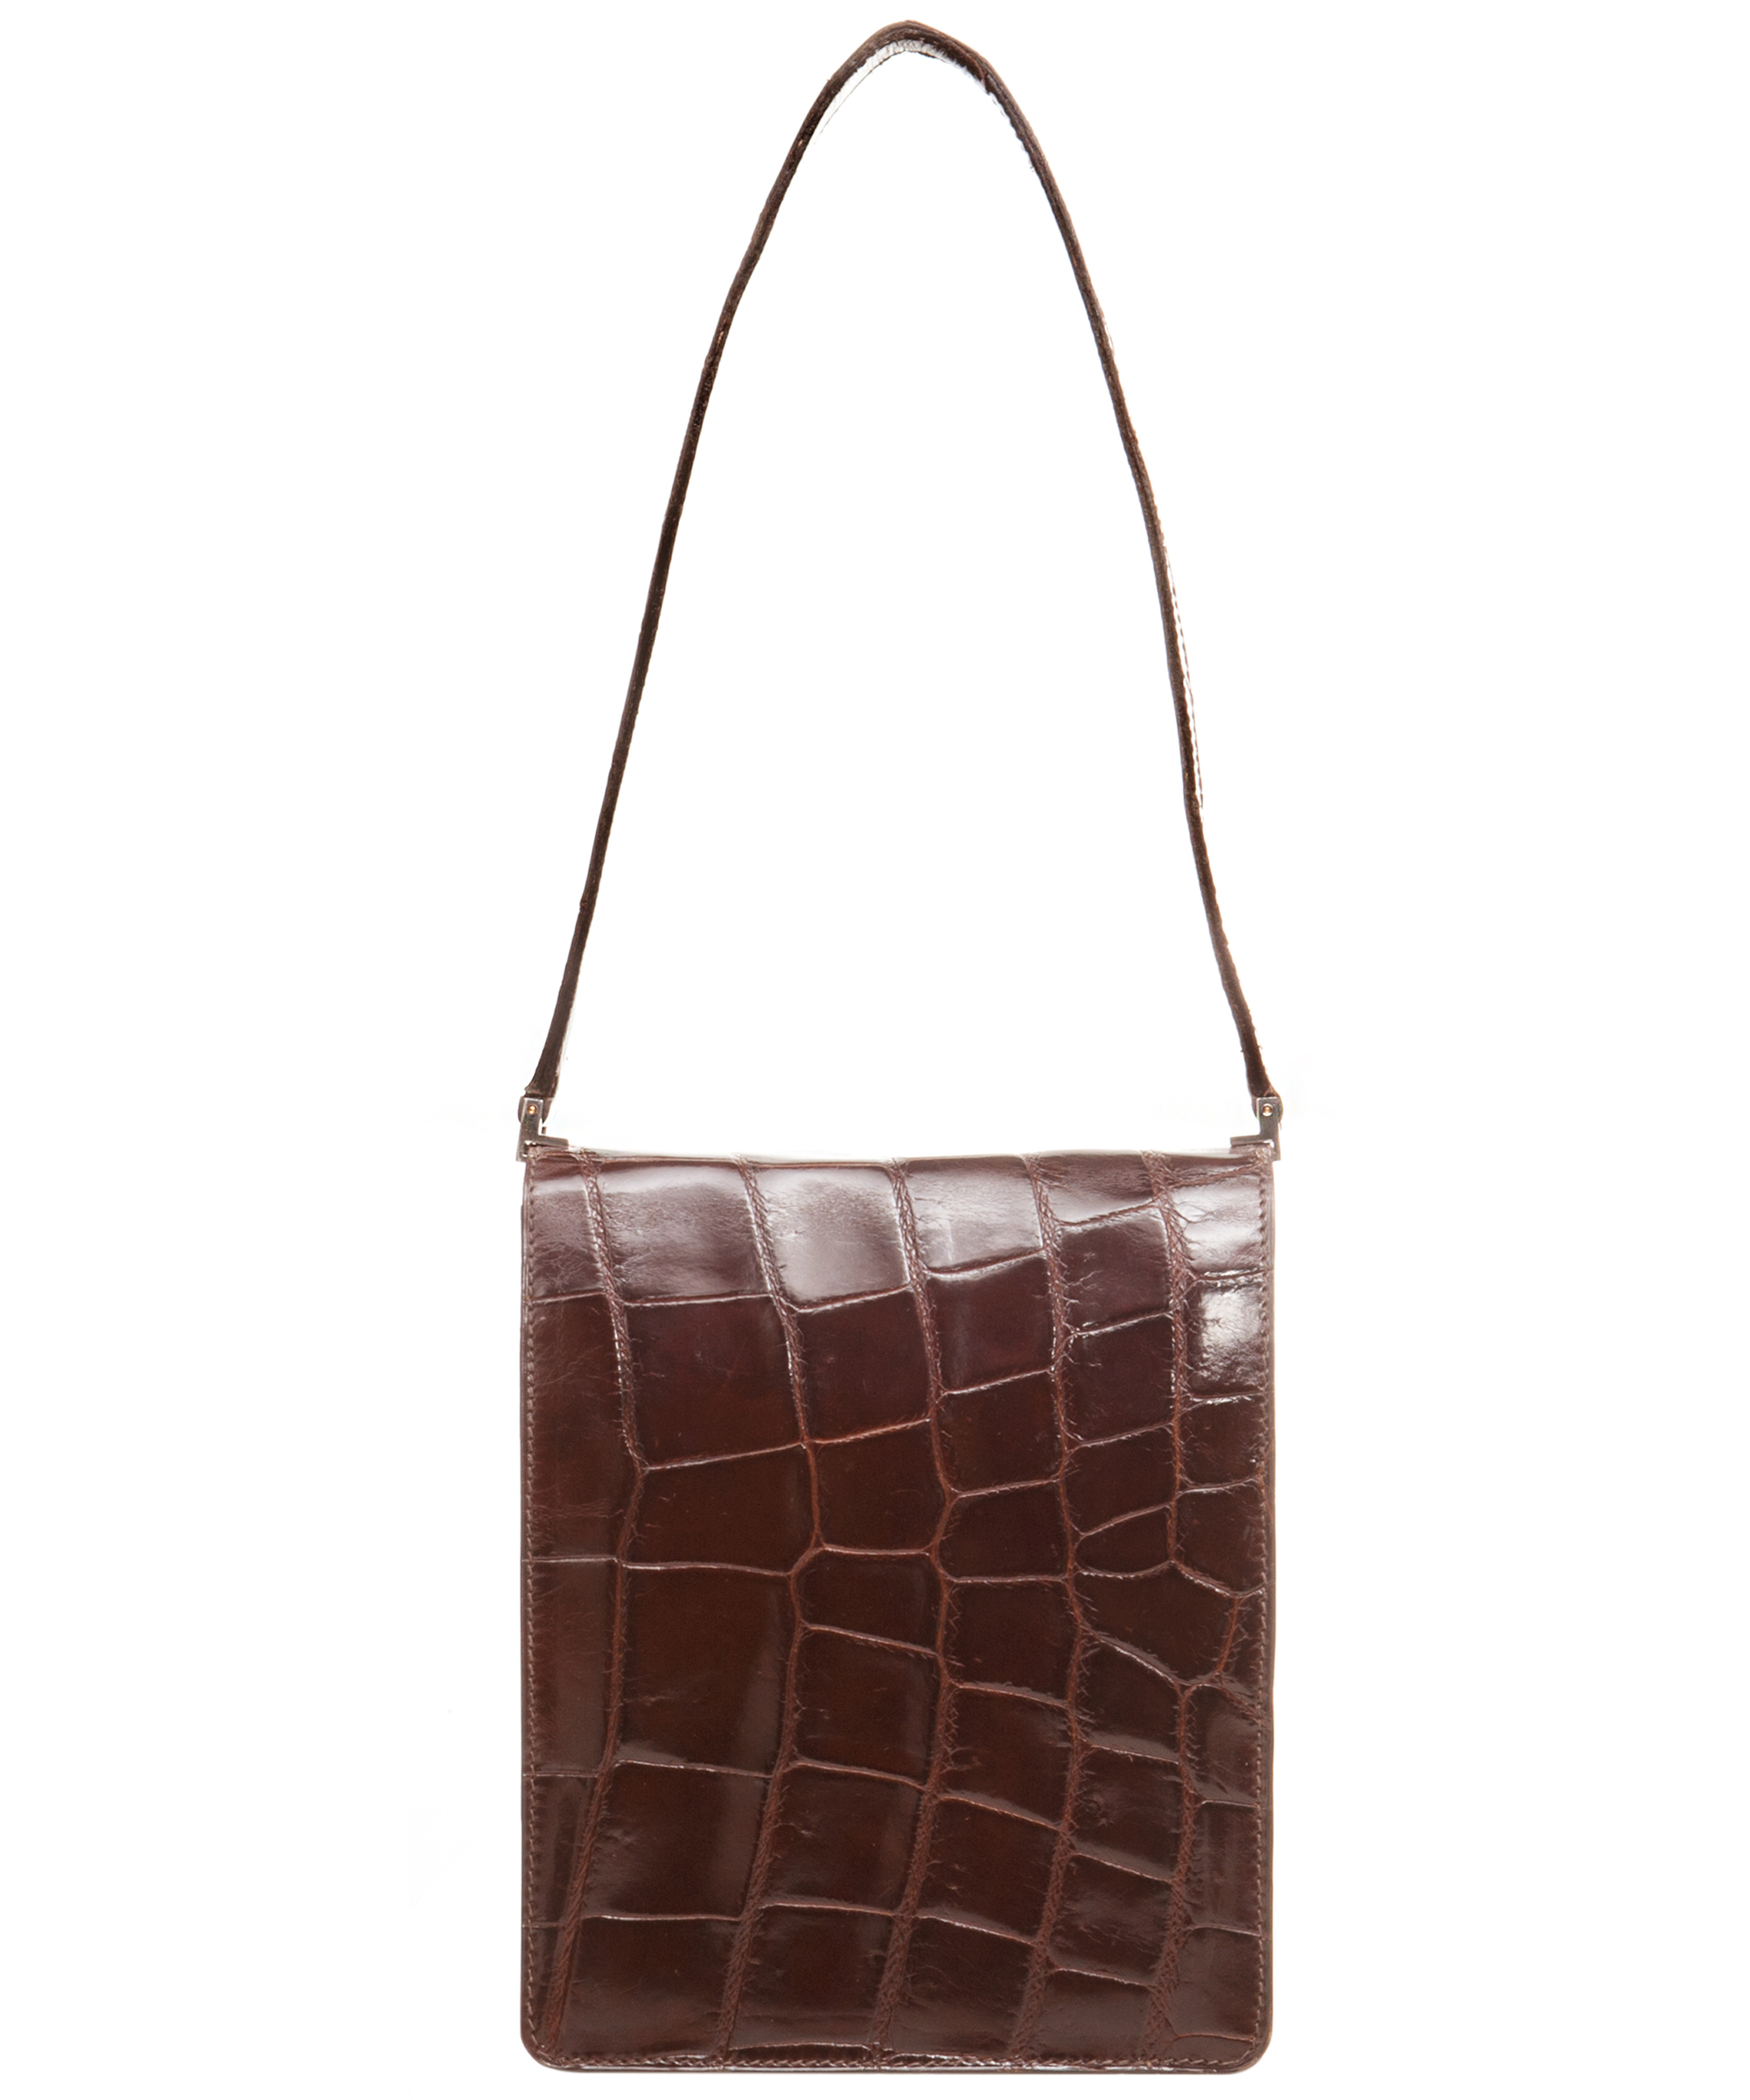 Pierre Cardin Burgundy Leather Medium Structured Shoulder Bag for womens:  Handbags: Amazon.com